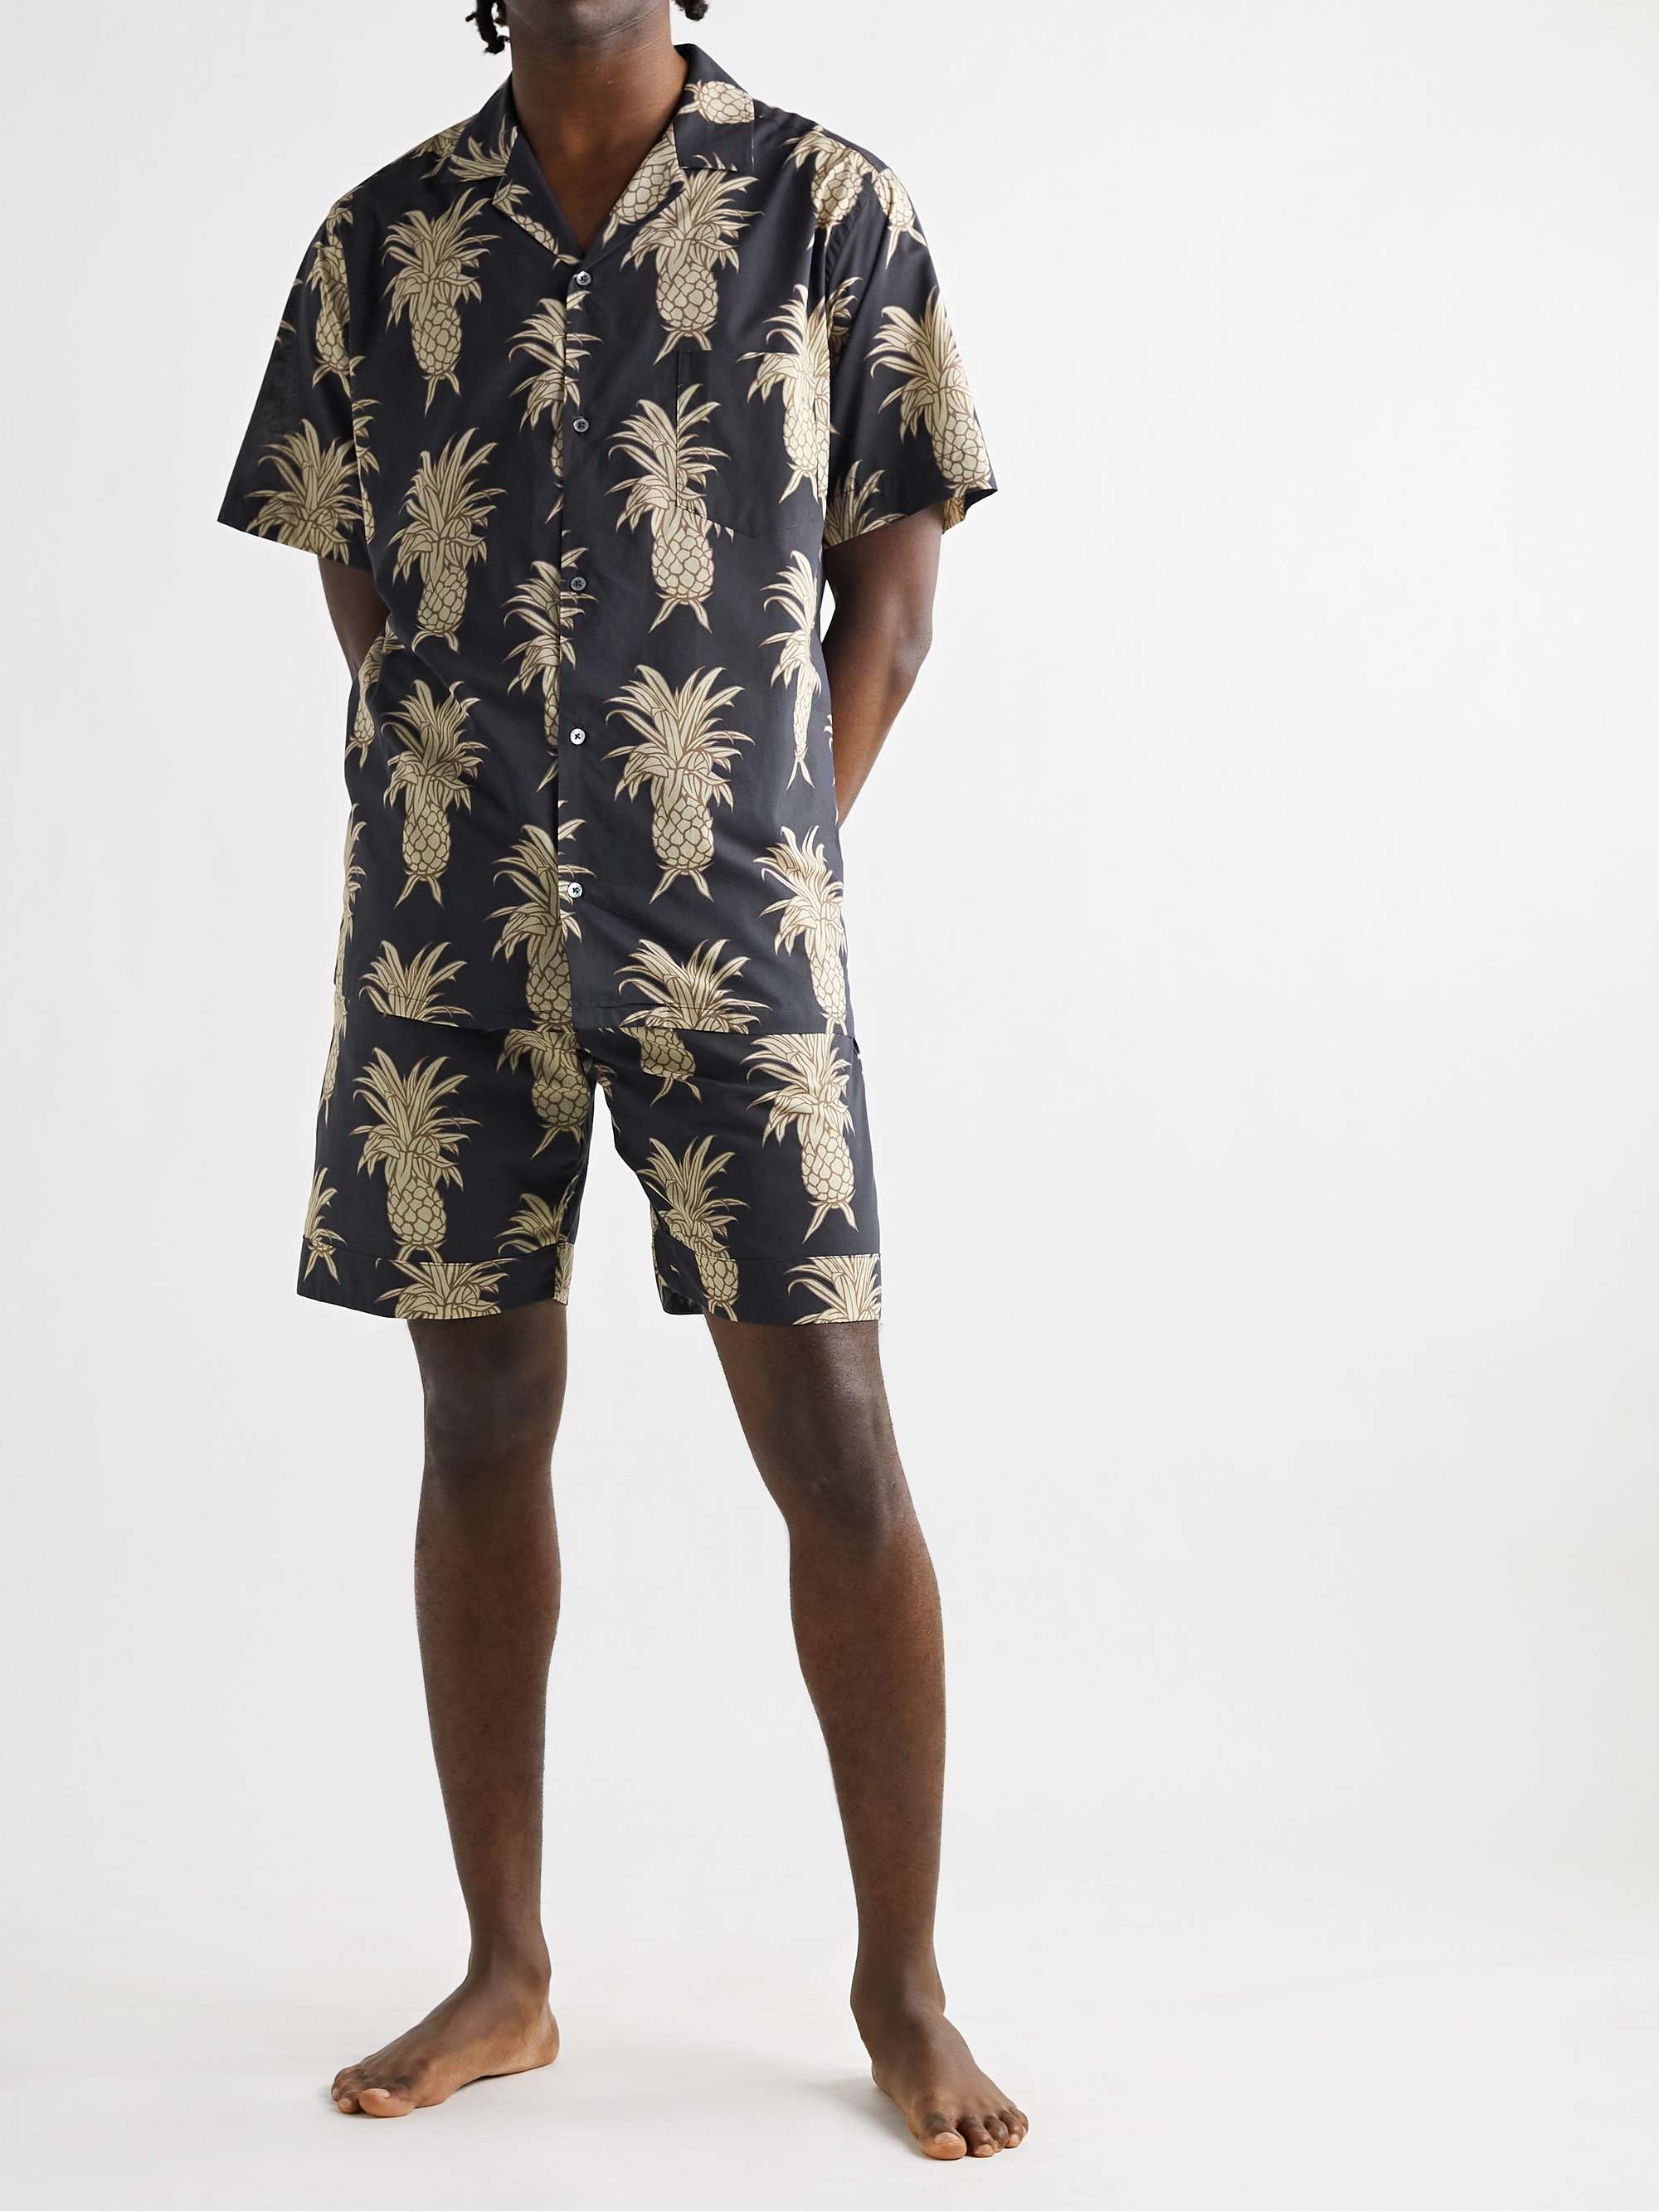 DESMOND & DEMPSEY Printed Cotton Pyjama Shorts | MR PORTER